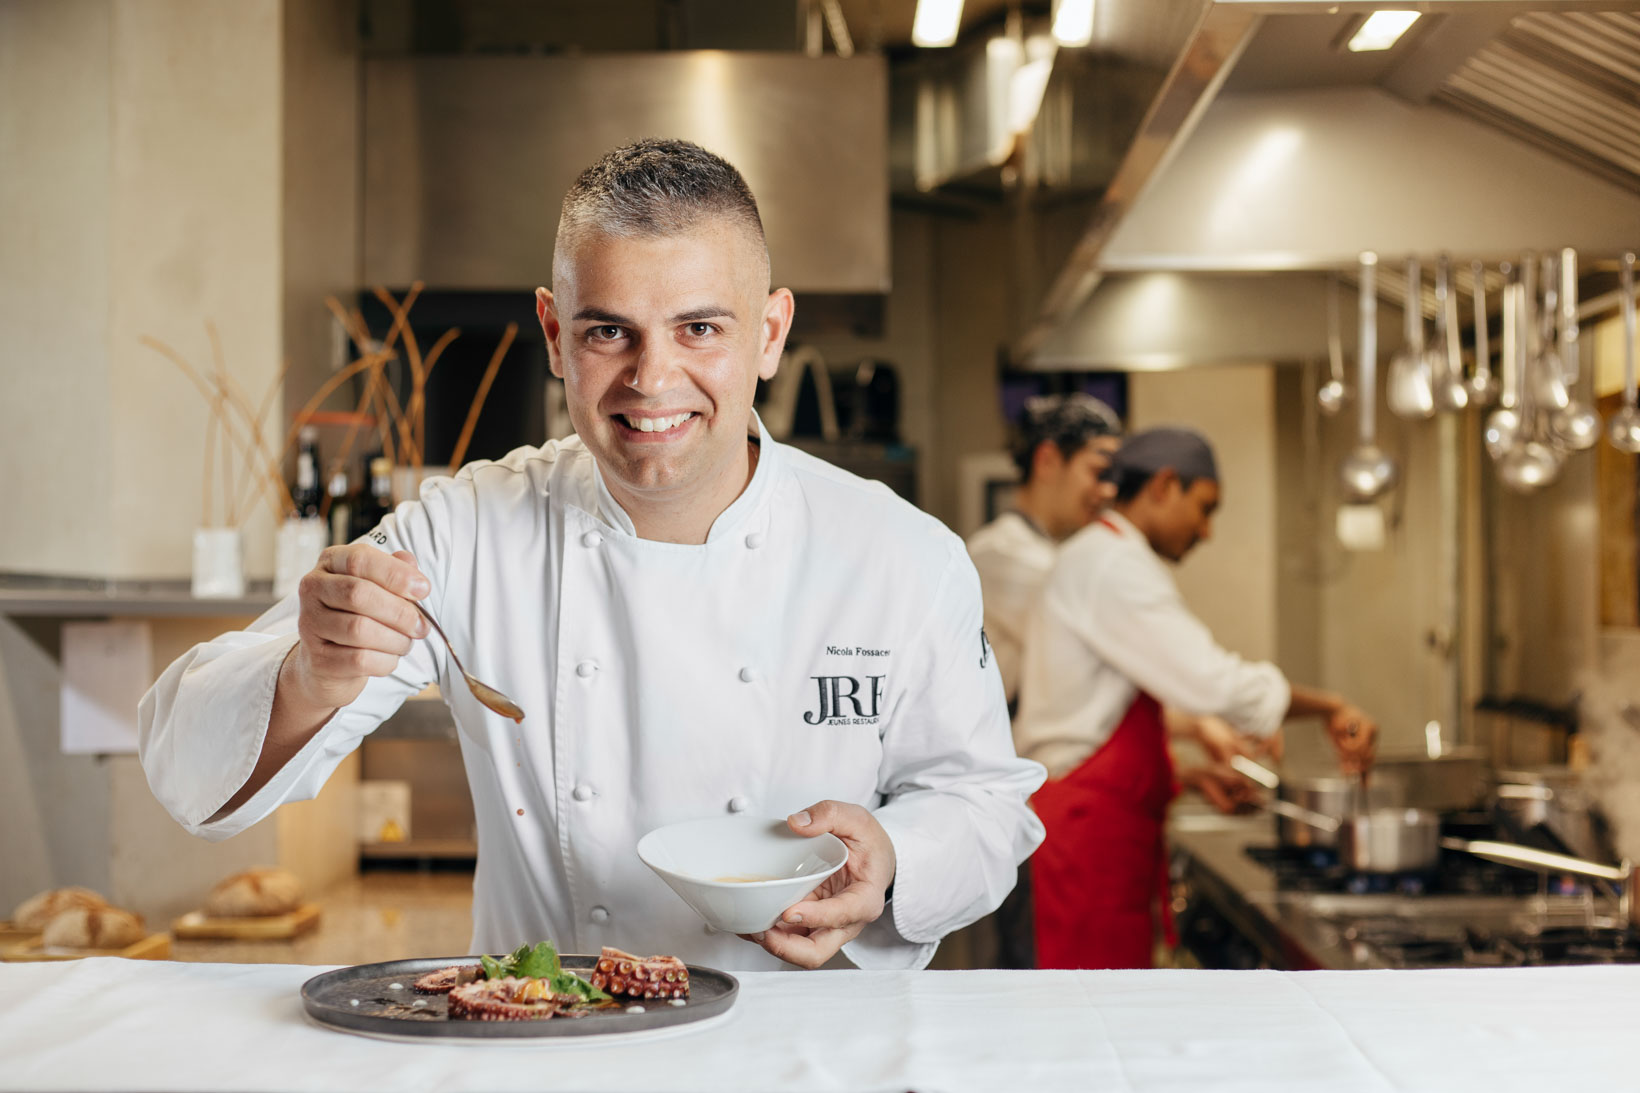 Rui-Lorenzo-Fotografo-food-chef-nicola-fossaceca-ristorante-al-metro-san-salvo-ch-jre-Al-Metrò_RUI2476_p_web